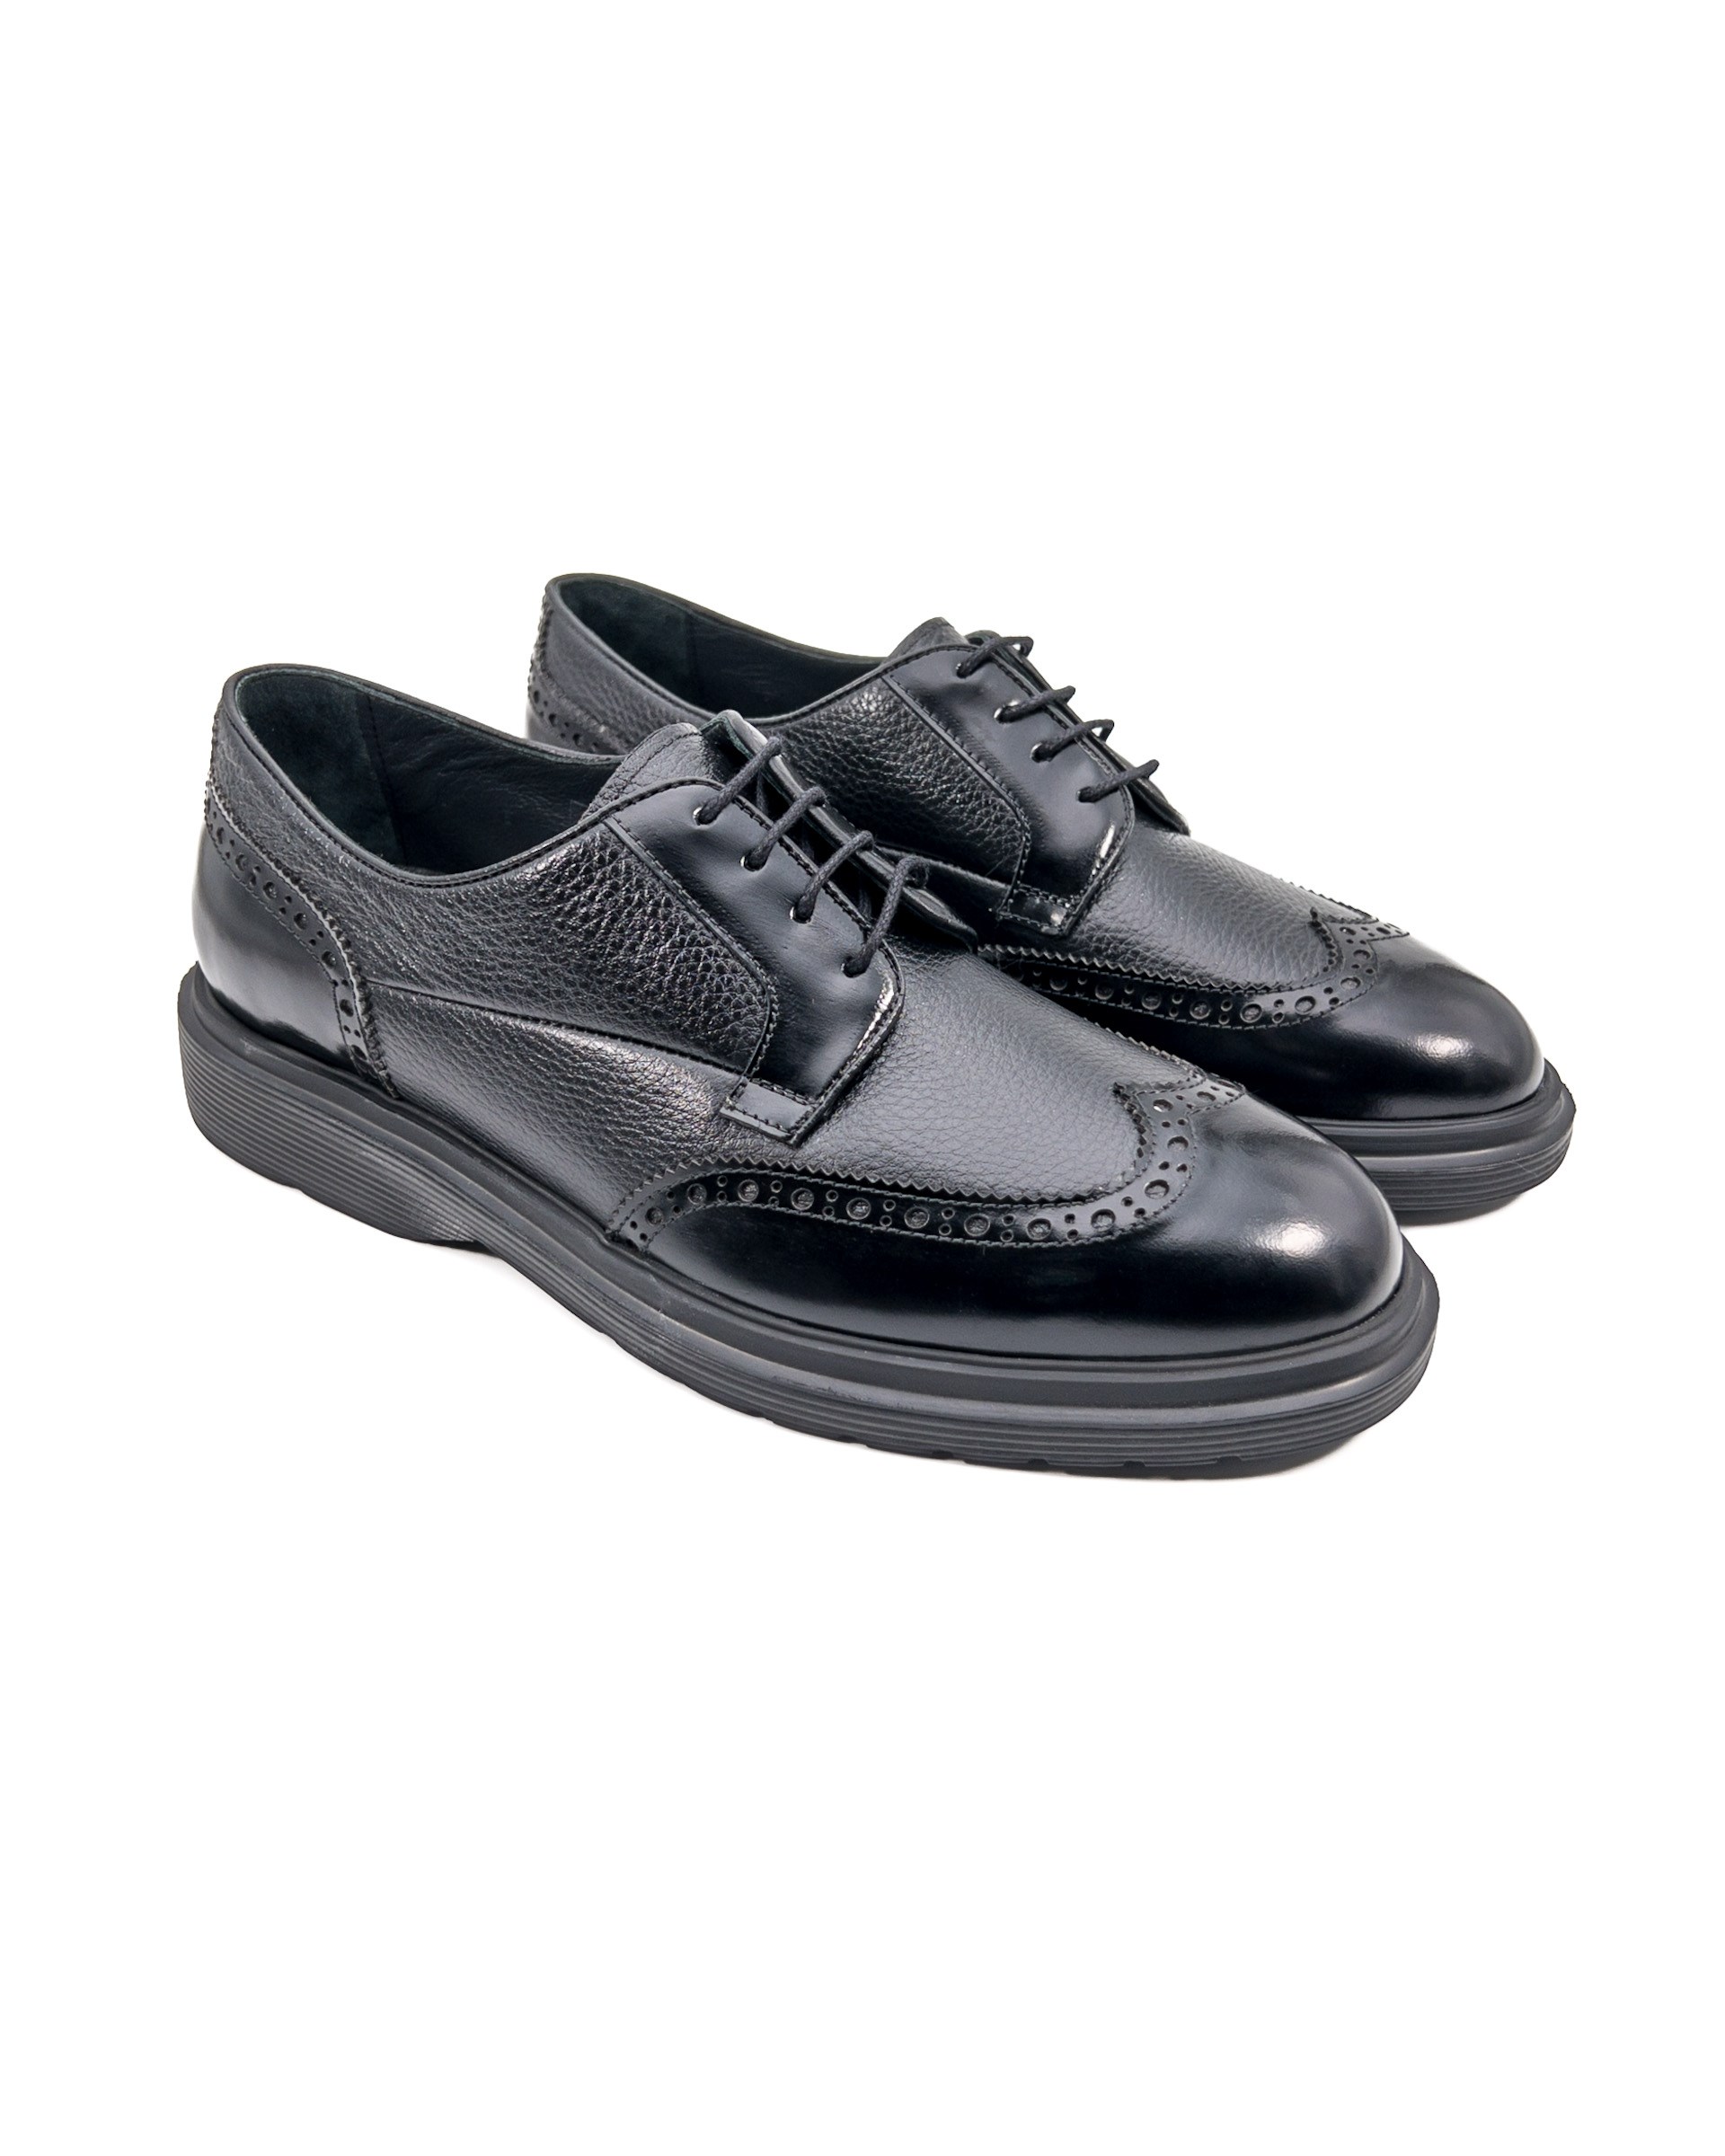 Armoni Black Genuine Leather & Patent Leather Casual Men's Shoes